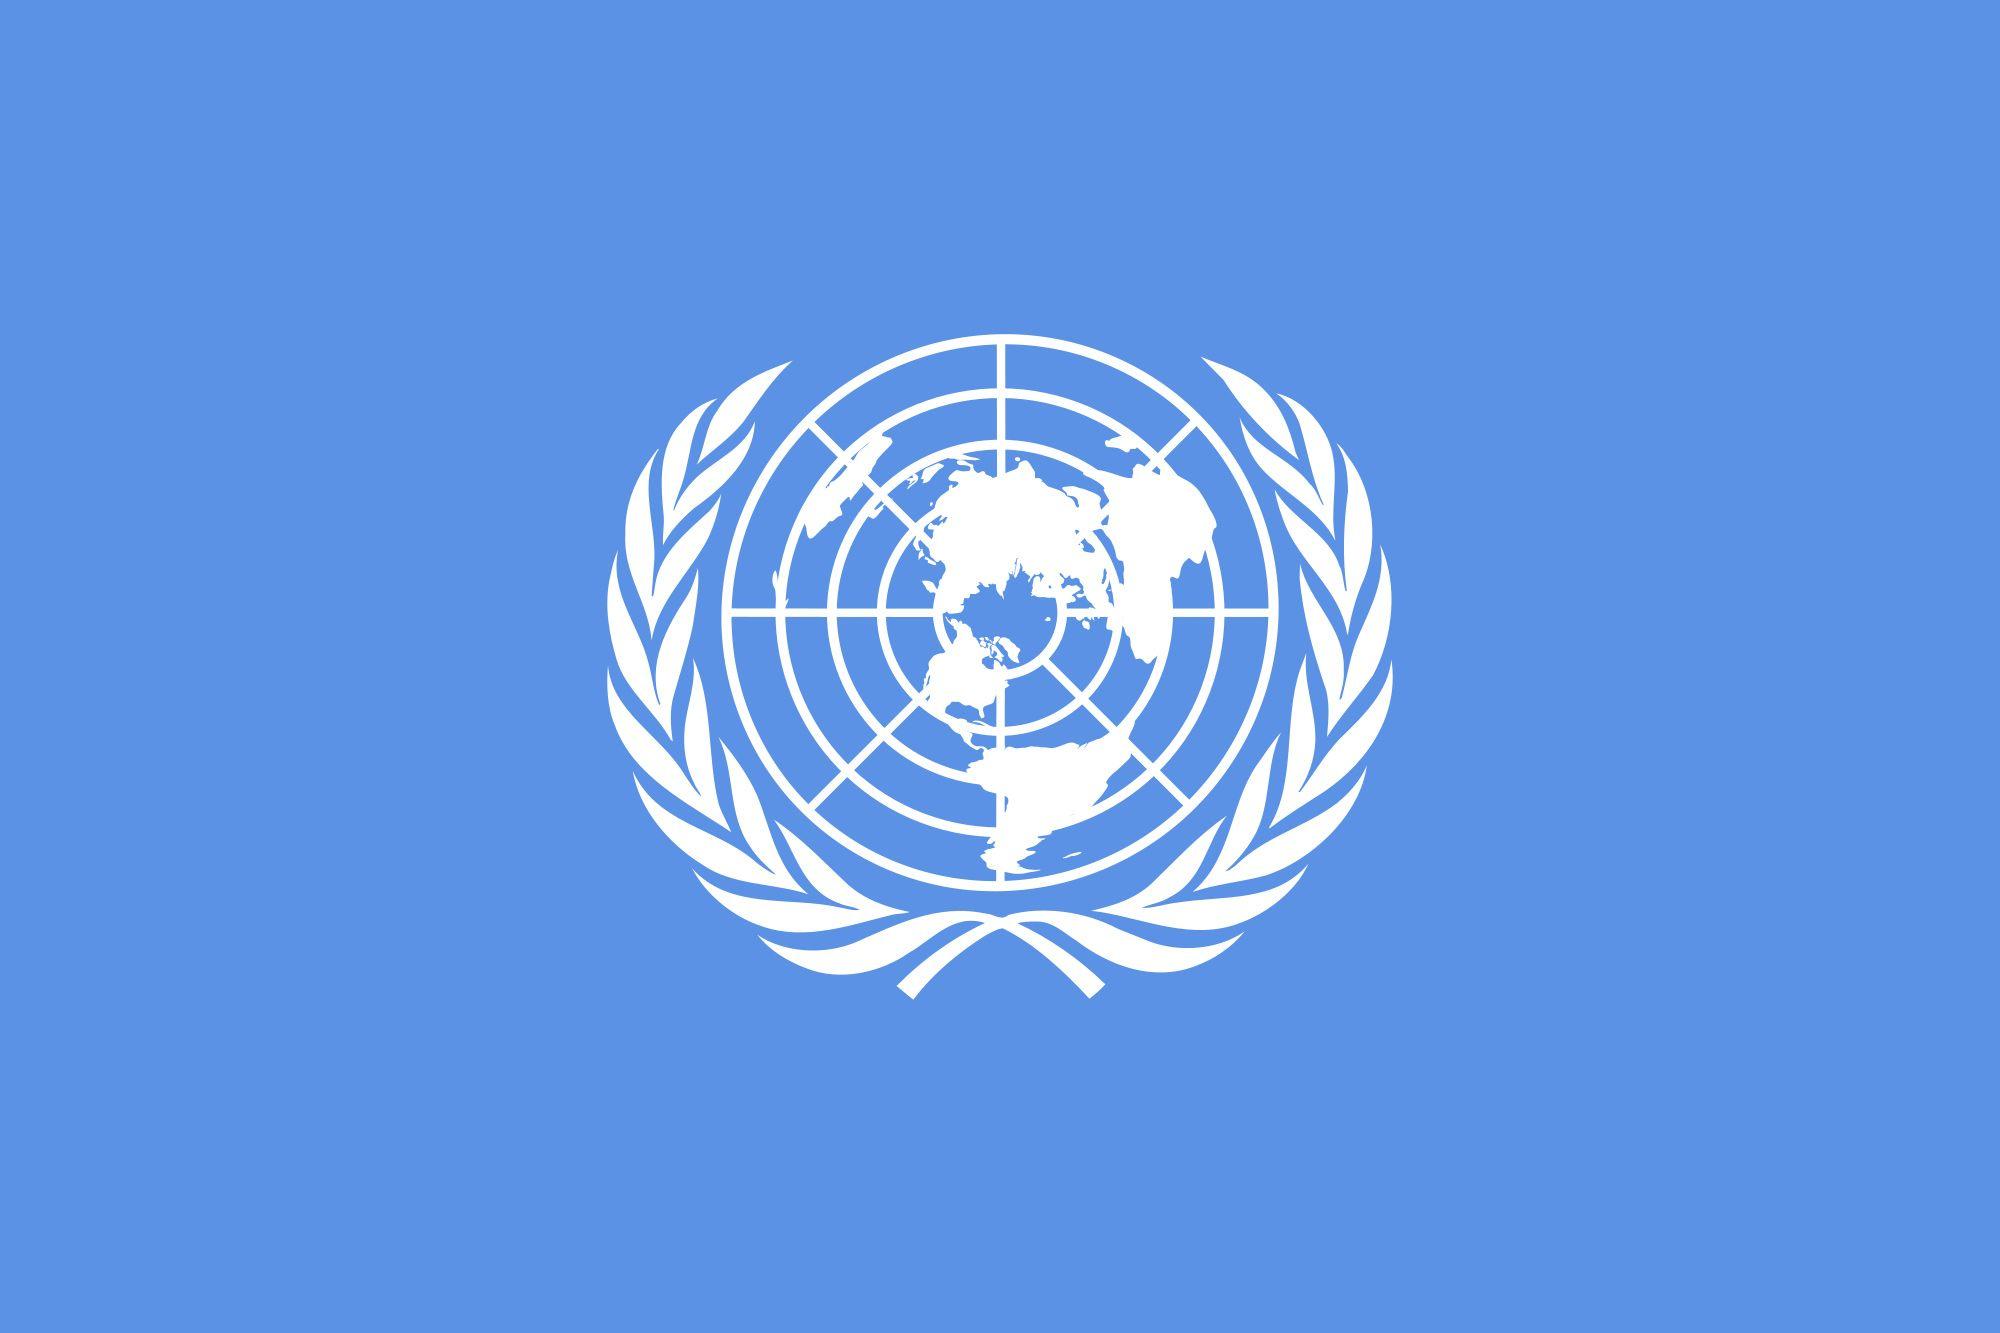 Map United Nations Logo - United Nations emblem British Library